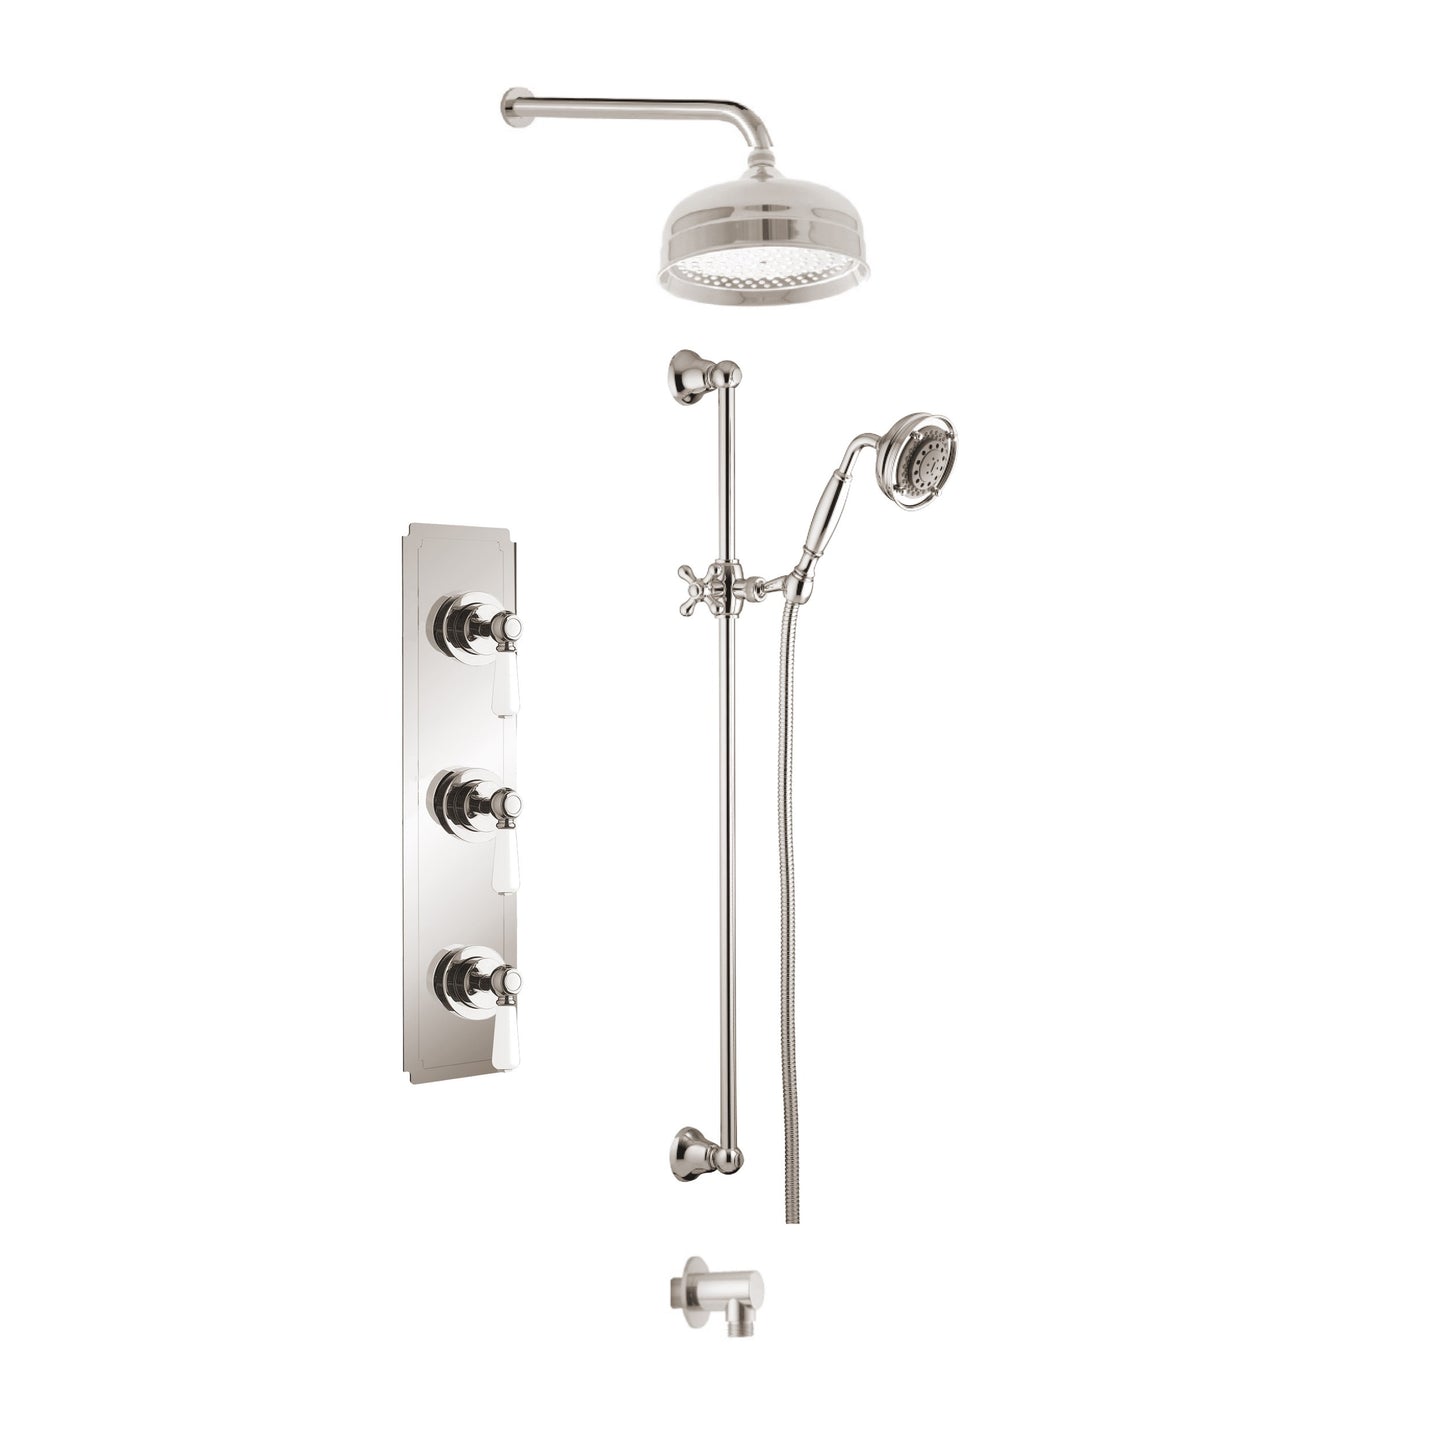 Aquadesign Products Shower Kit (Regent 3712RL) - Polished Nickel w/White Handle